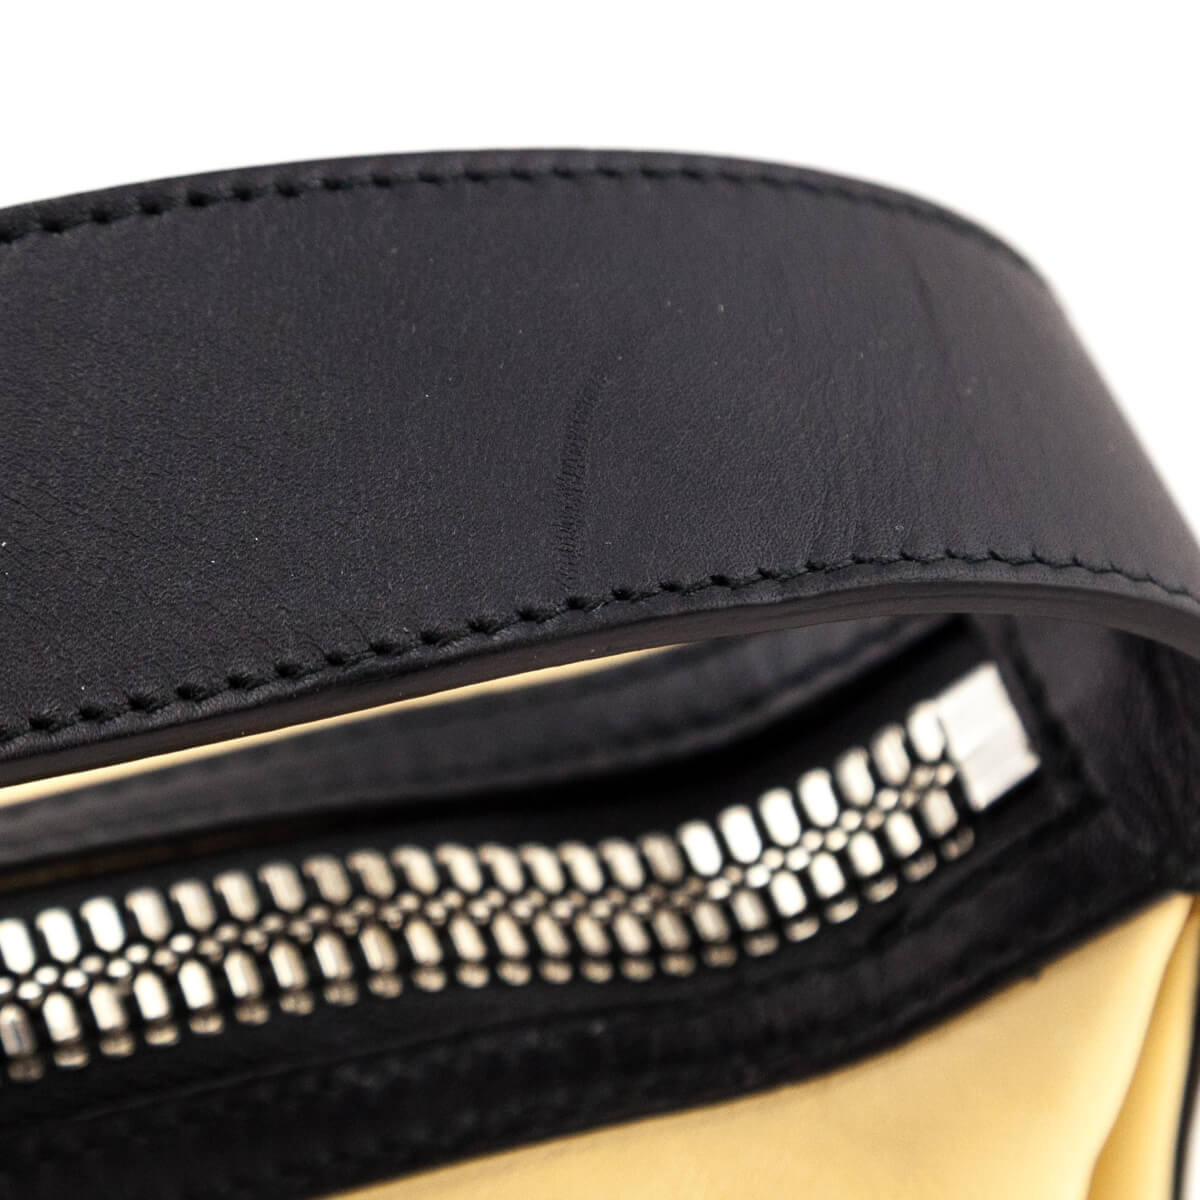 Balenciaga Beige & Black Leather Bag - Love that Bag etc - Preowned Authentic Designer Handbags & Preloved Fashions